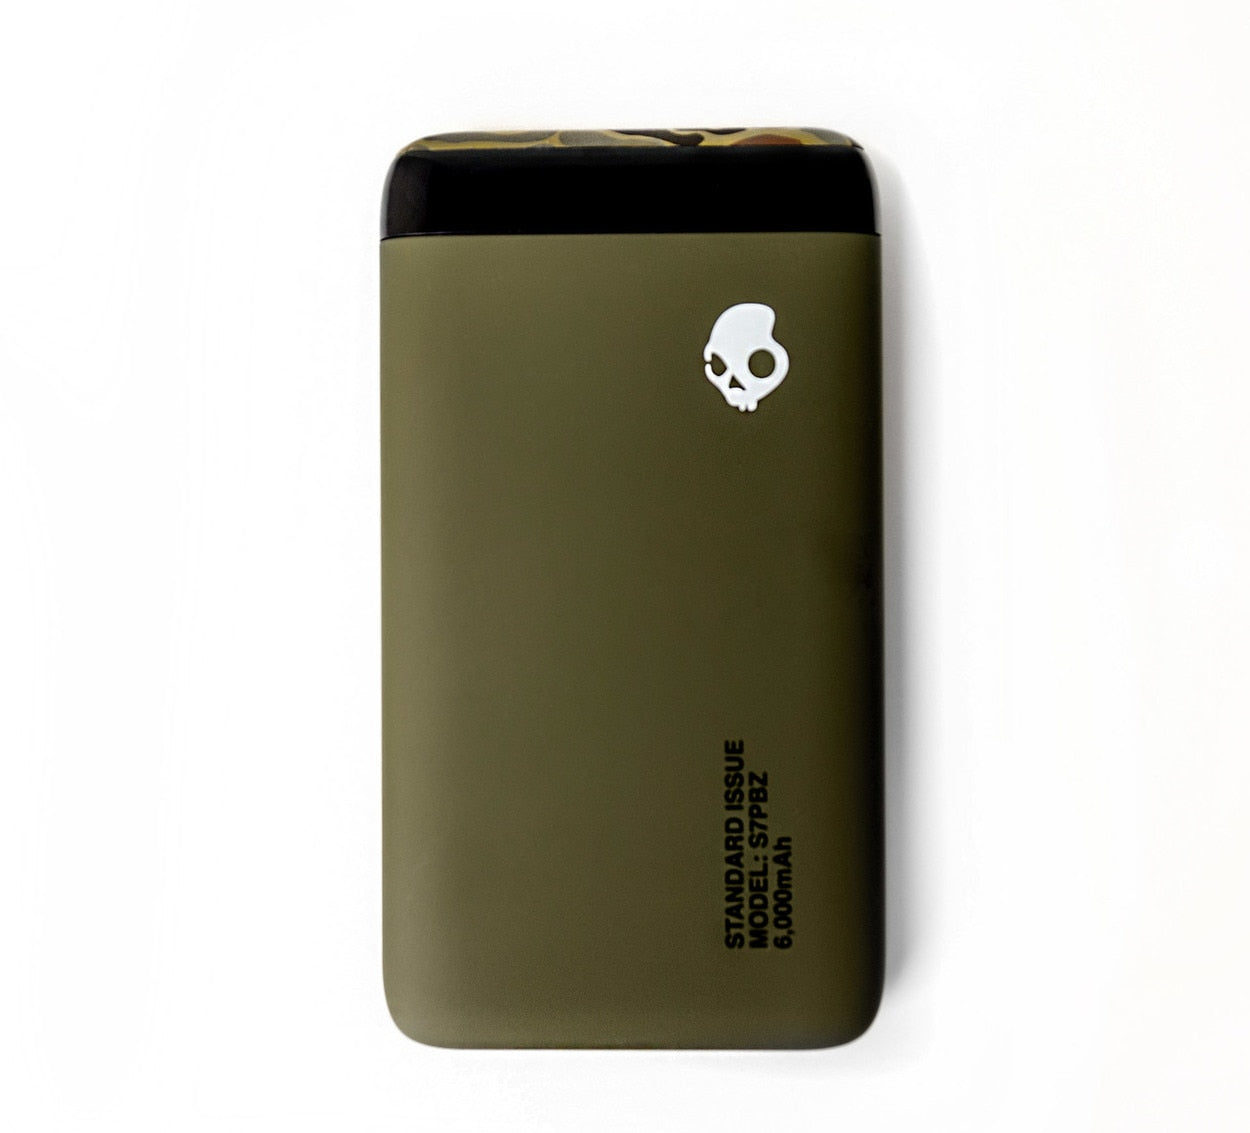 Skullcandy Stash Portable Power Bank - Olive/Camo